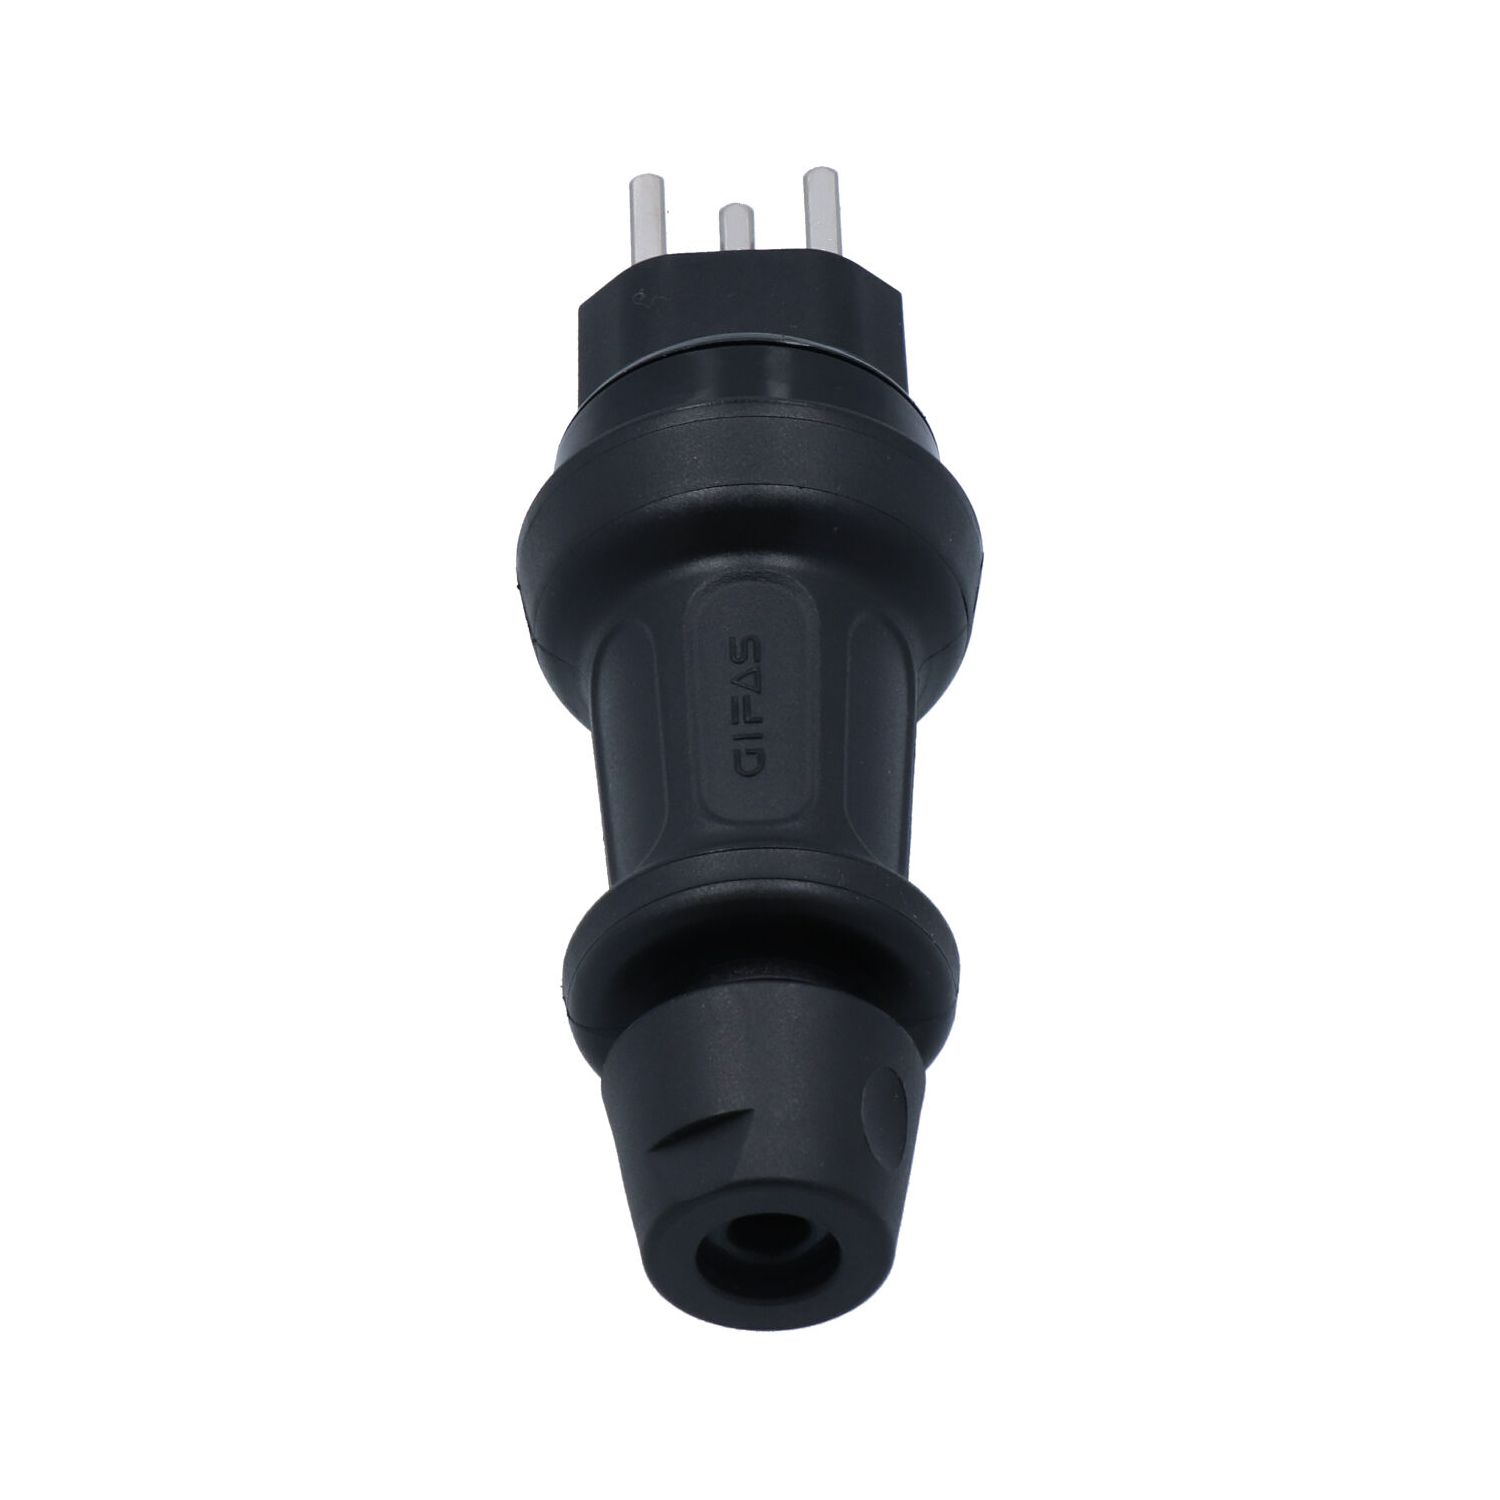 Plug type 23 230V/16A/P+N+E IP55 black - GIFAS-ELECTRIC GmbH